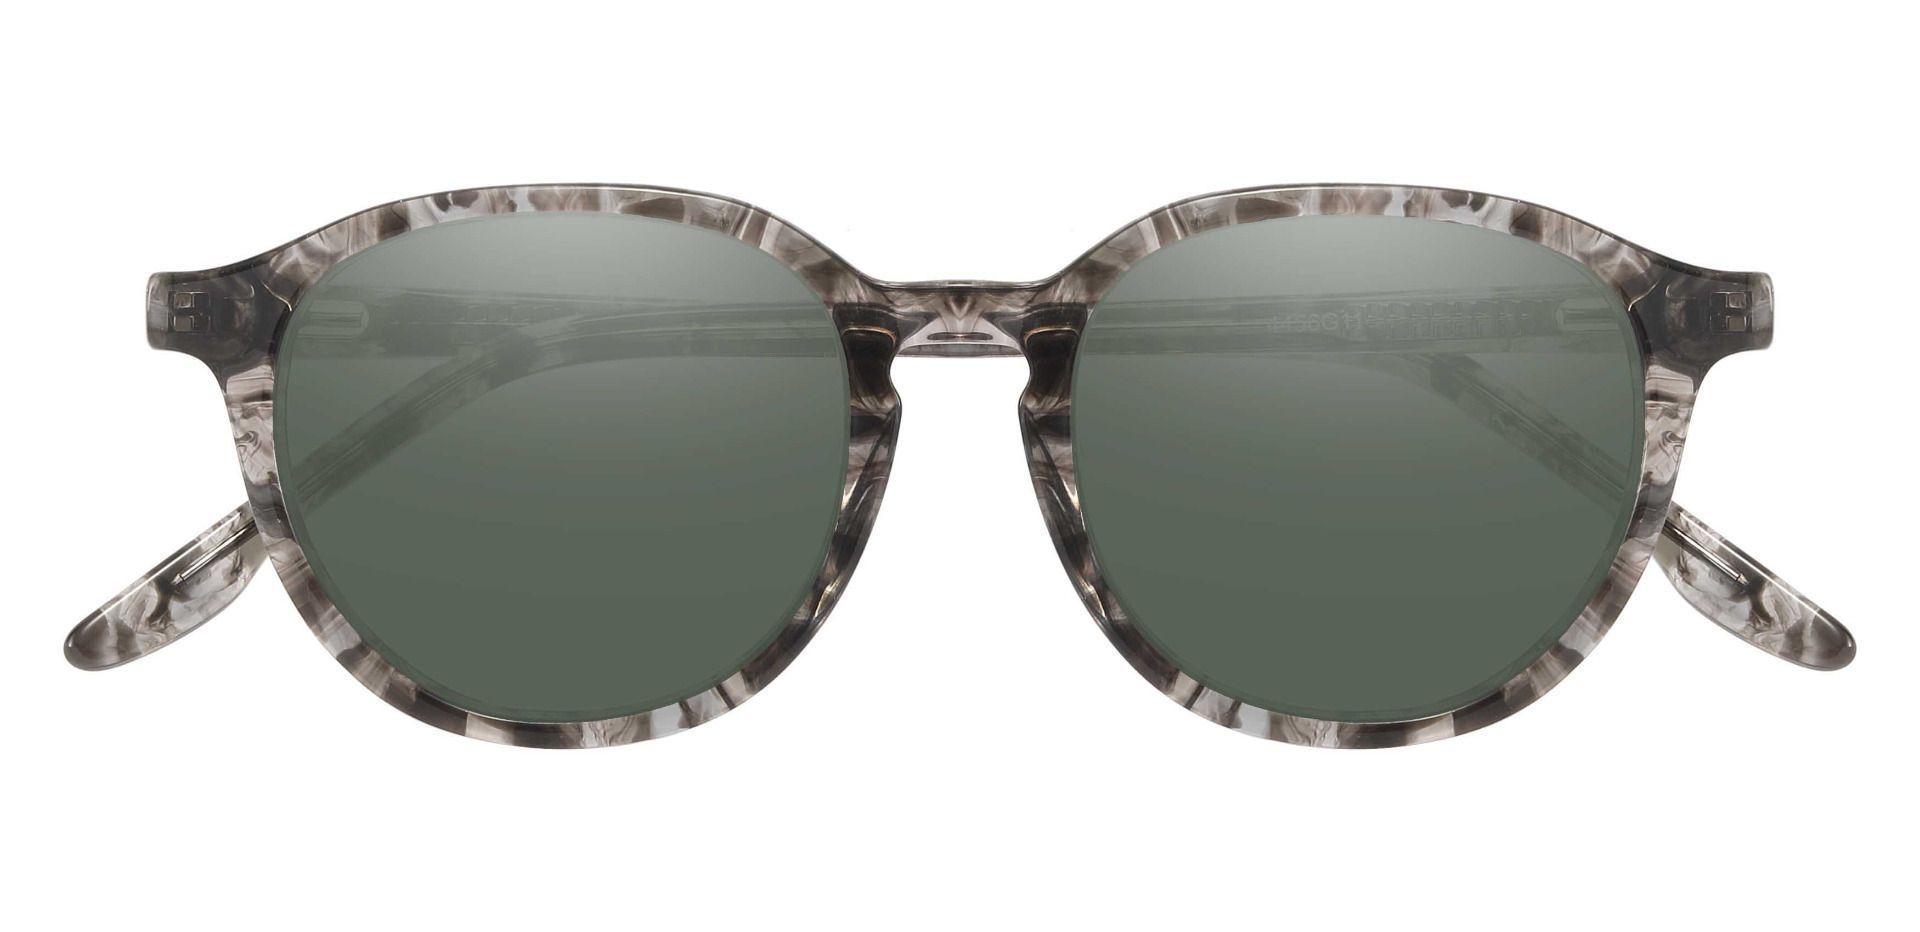 Ashley Oval Progressive Sunglasses - Gray Frame With Green Lenses